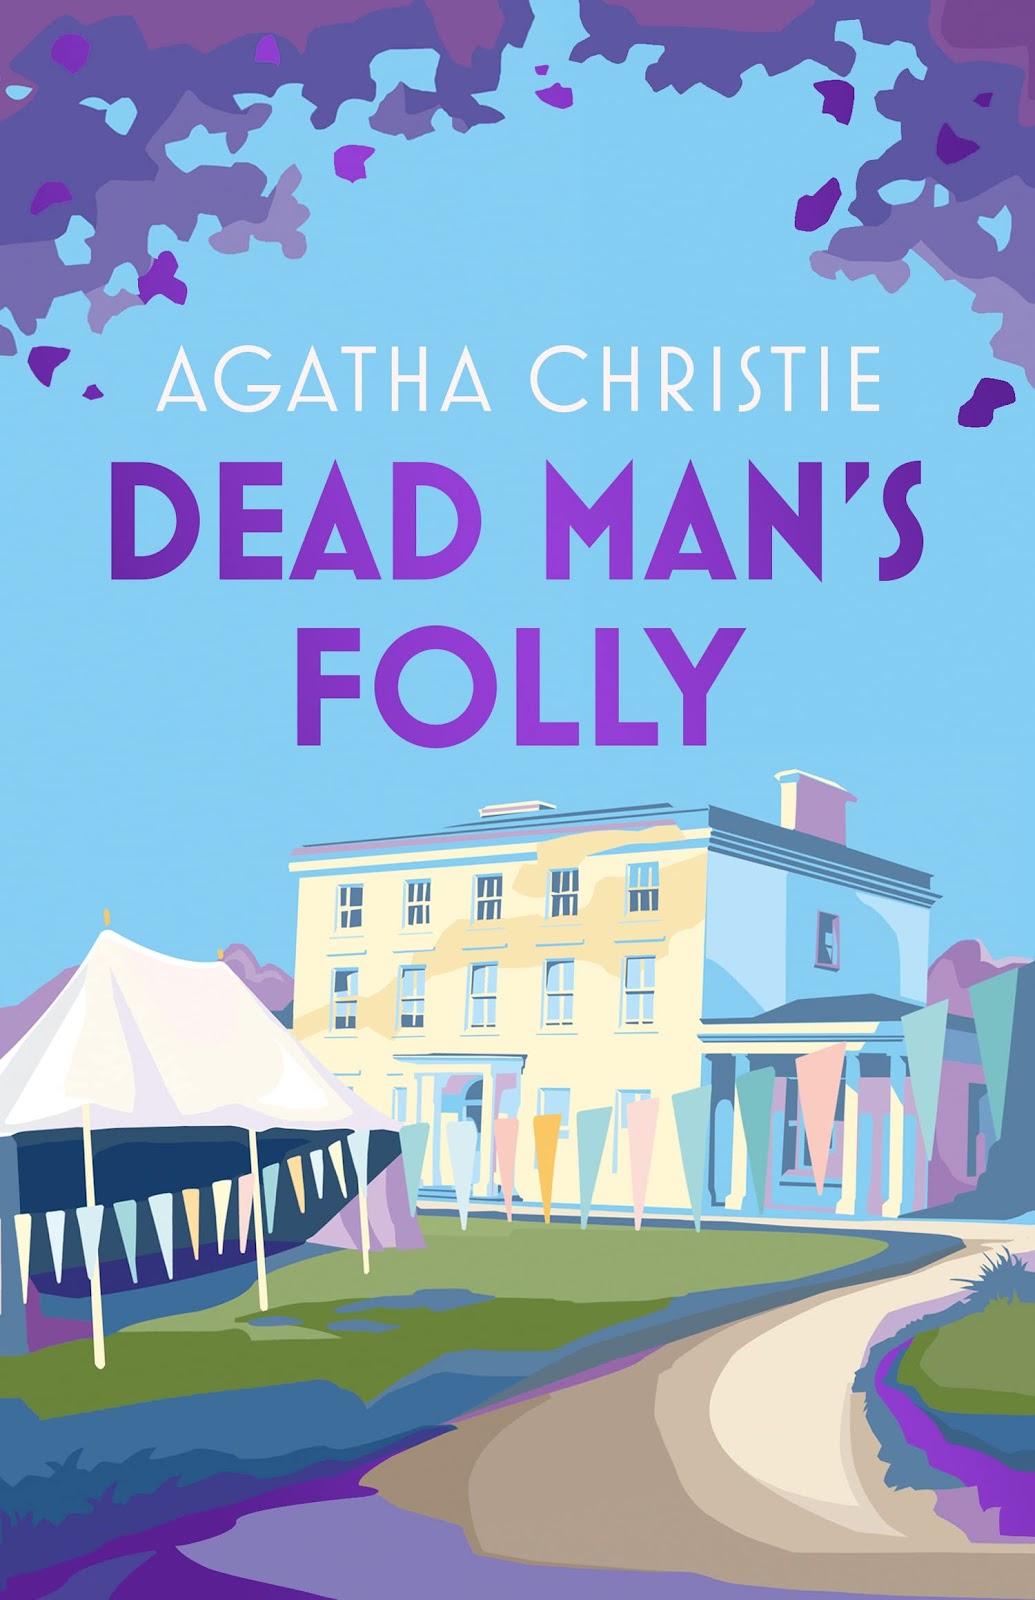 Dead Man’s Folly by Agatha Christie